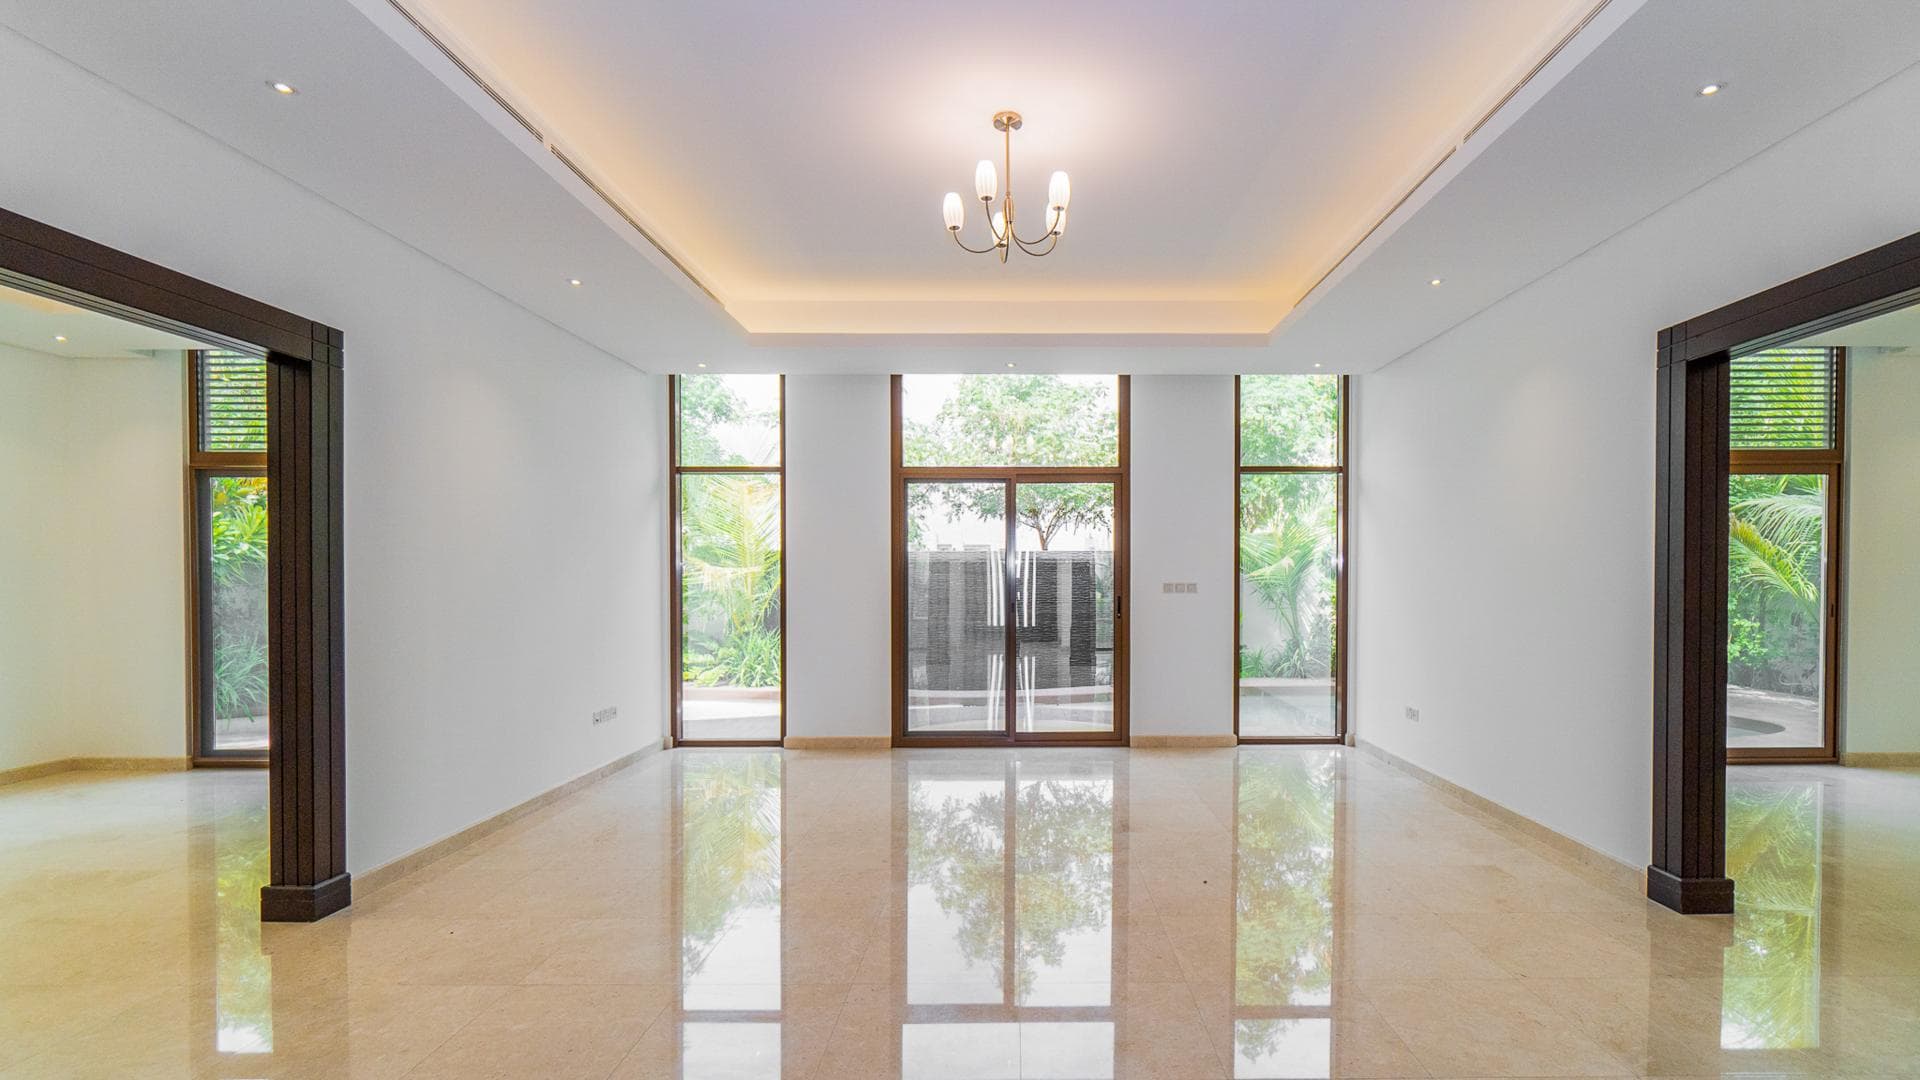 5 Bedroom Villa For Rent Meydan Gated Community Lp13586 2943a907dc2b0000.jpg